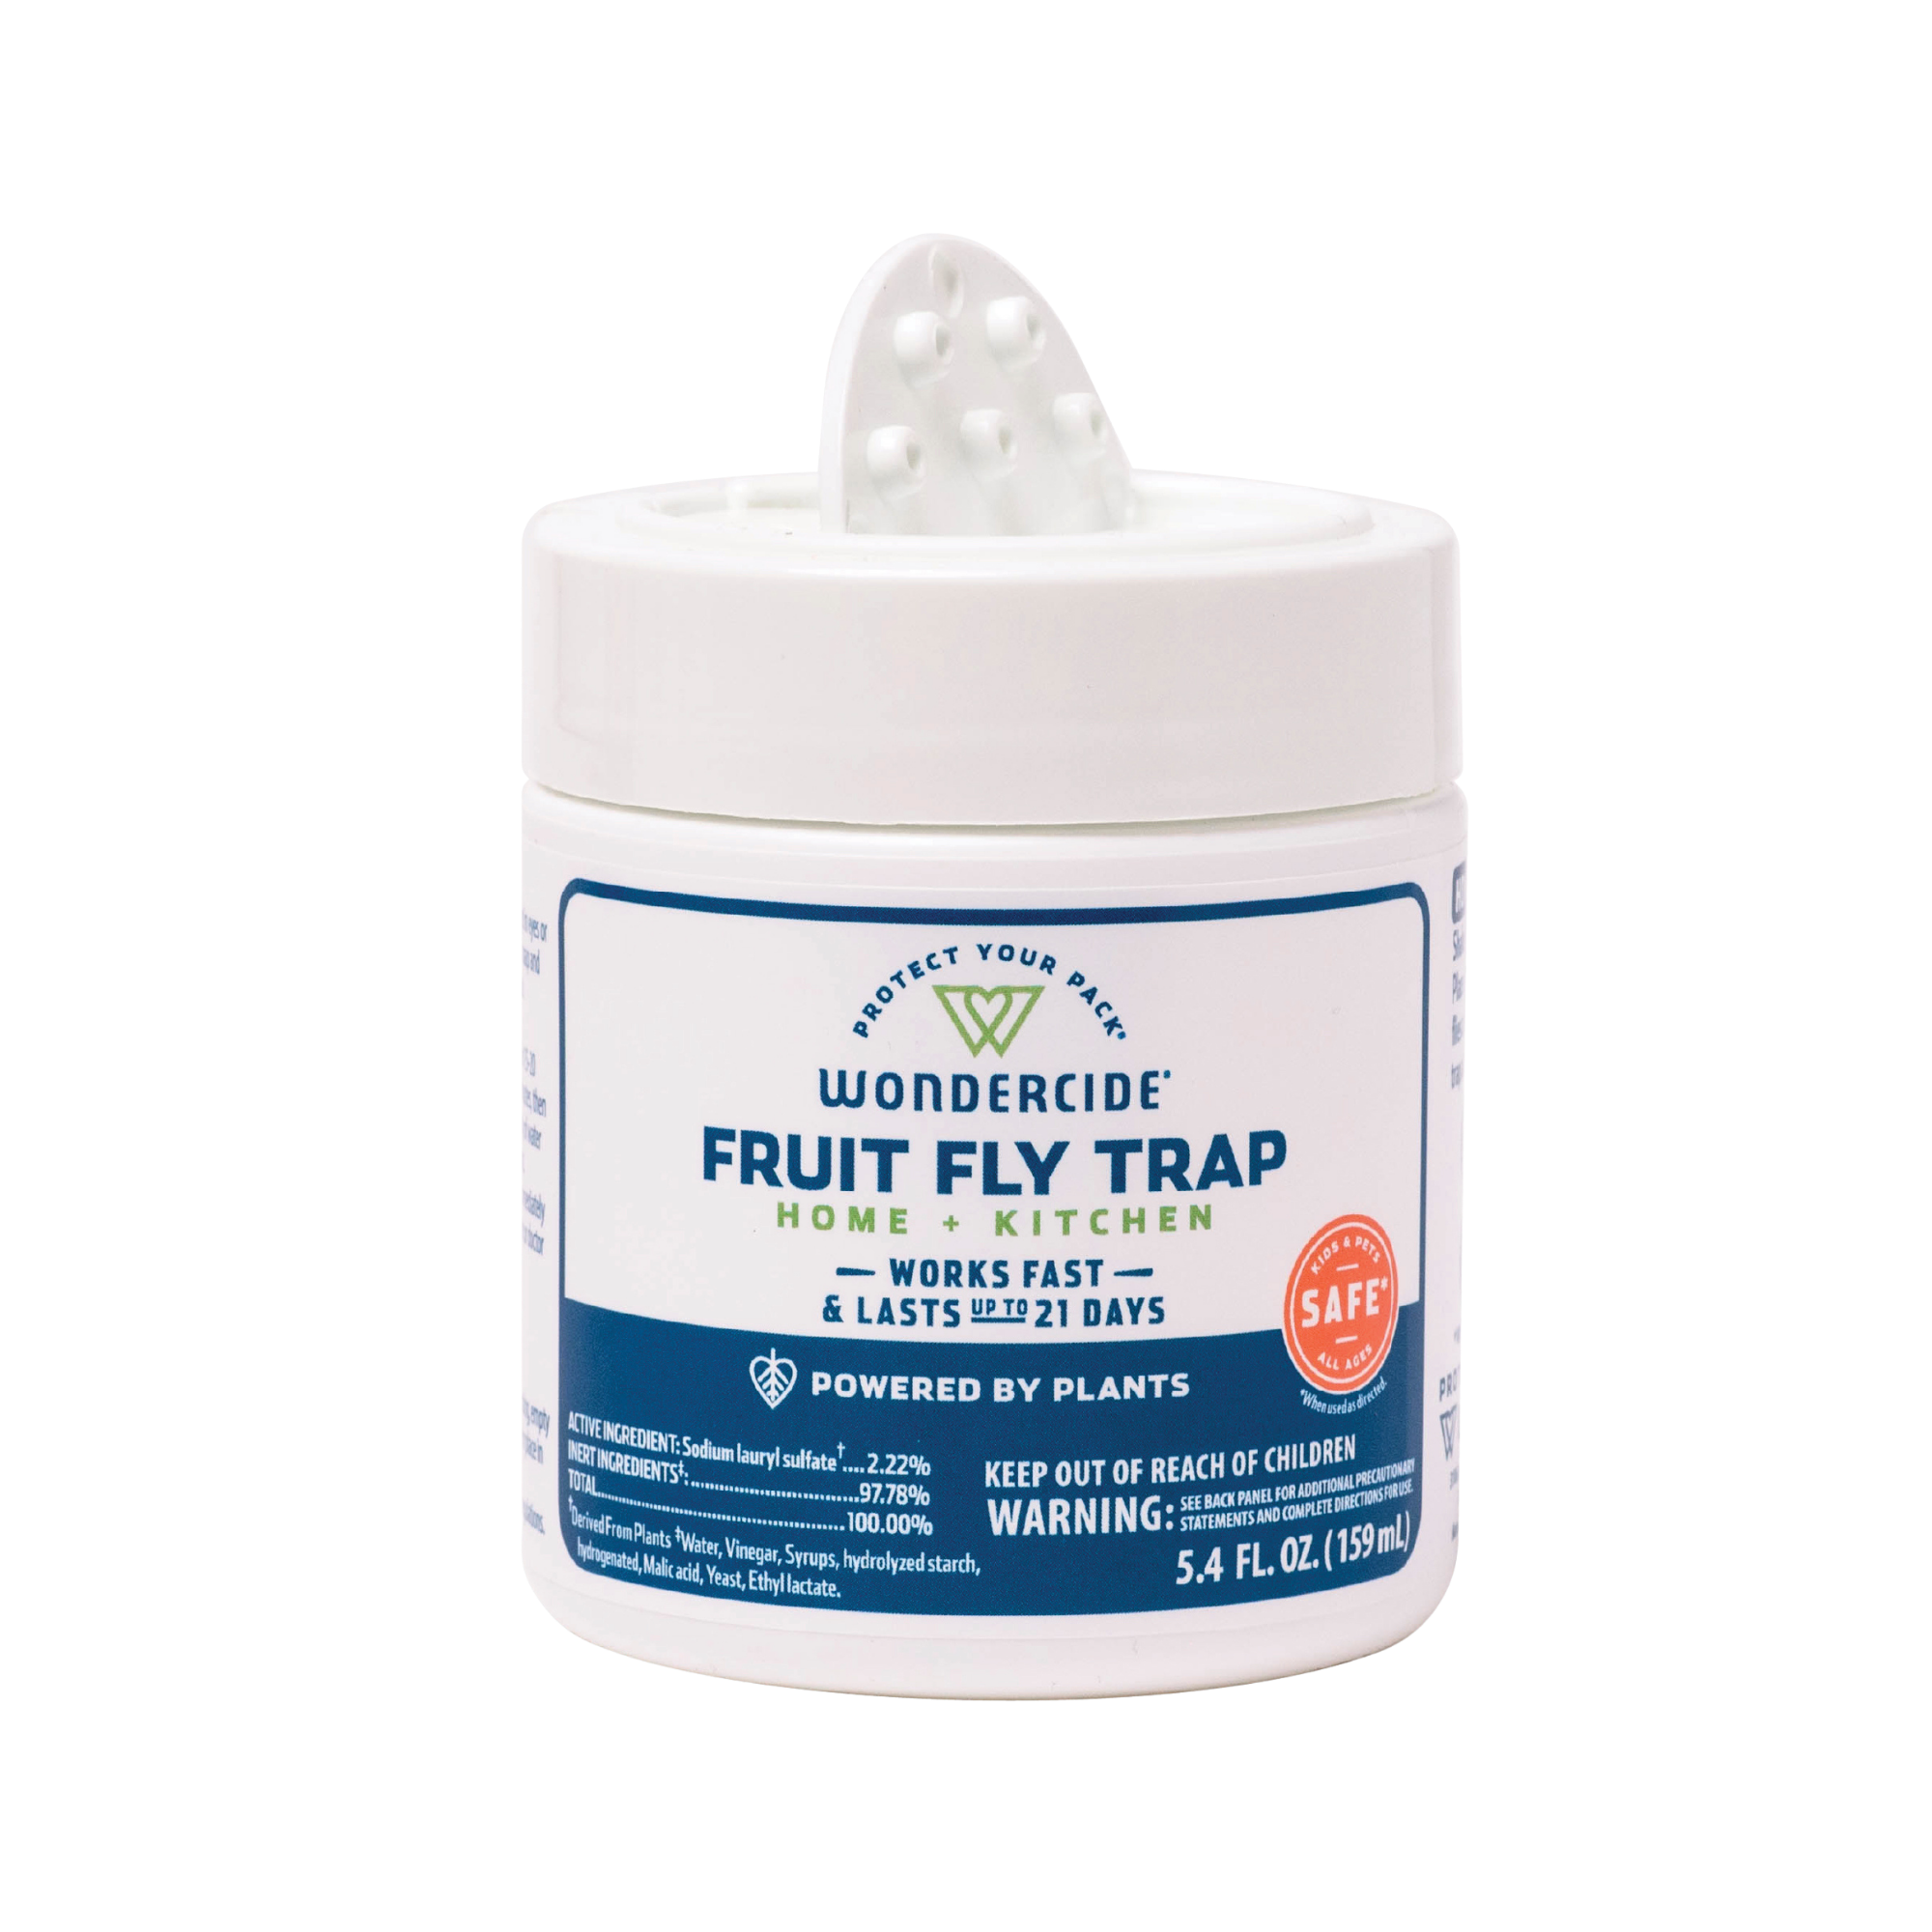 Wondercide 5.4 oz Fruit Fly Trap Home + Kitchen - Mutts & Co.